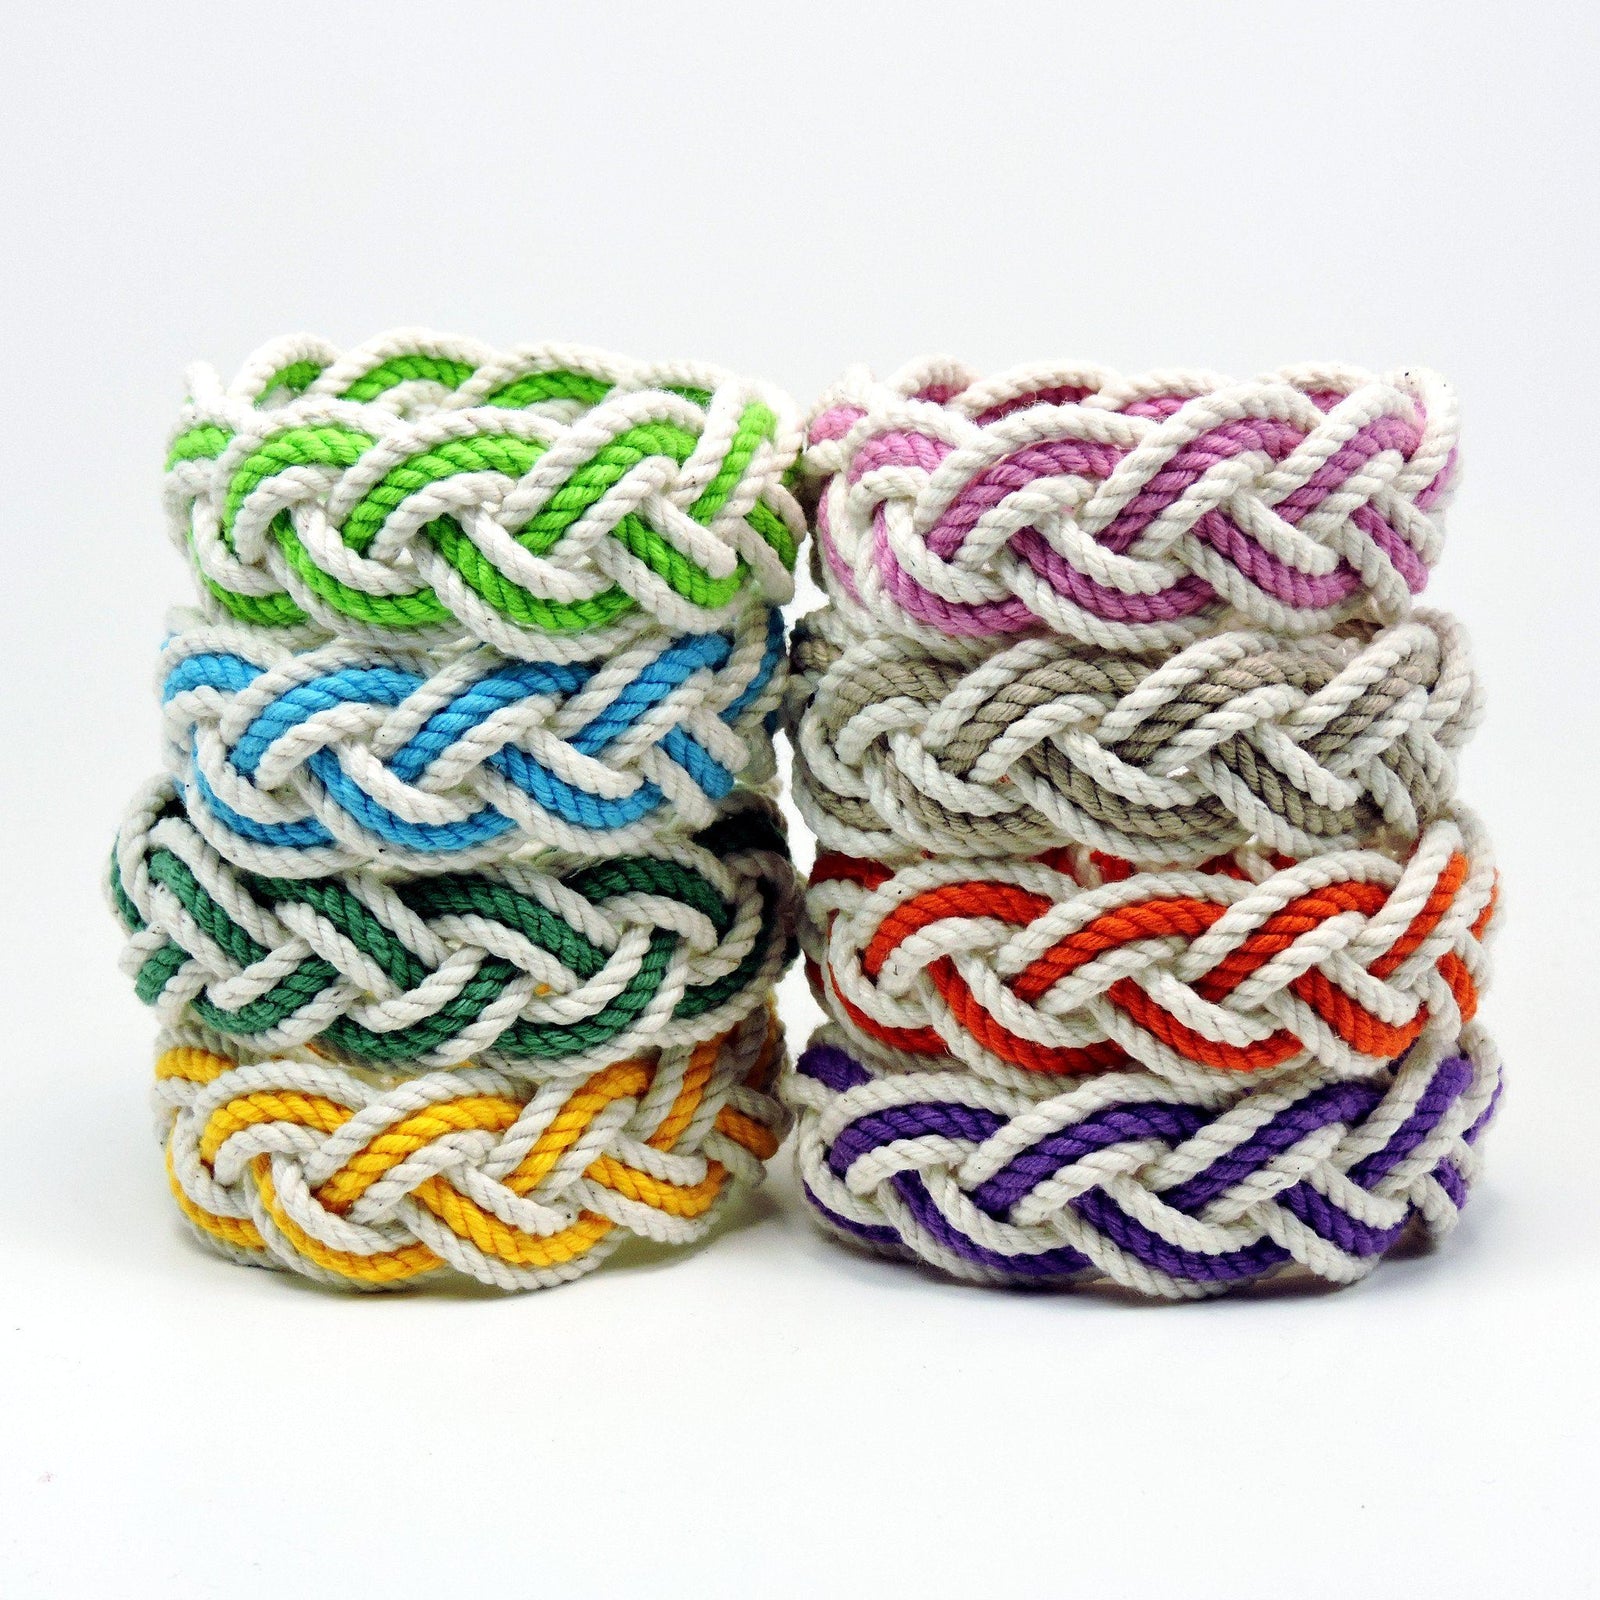 Sailor's Knot Bangle - nautical rope infinity knot bangle bracelet – Foamy  Wader